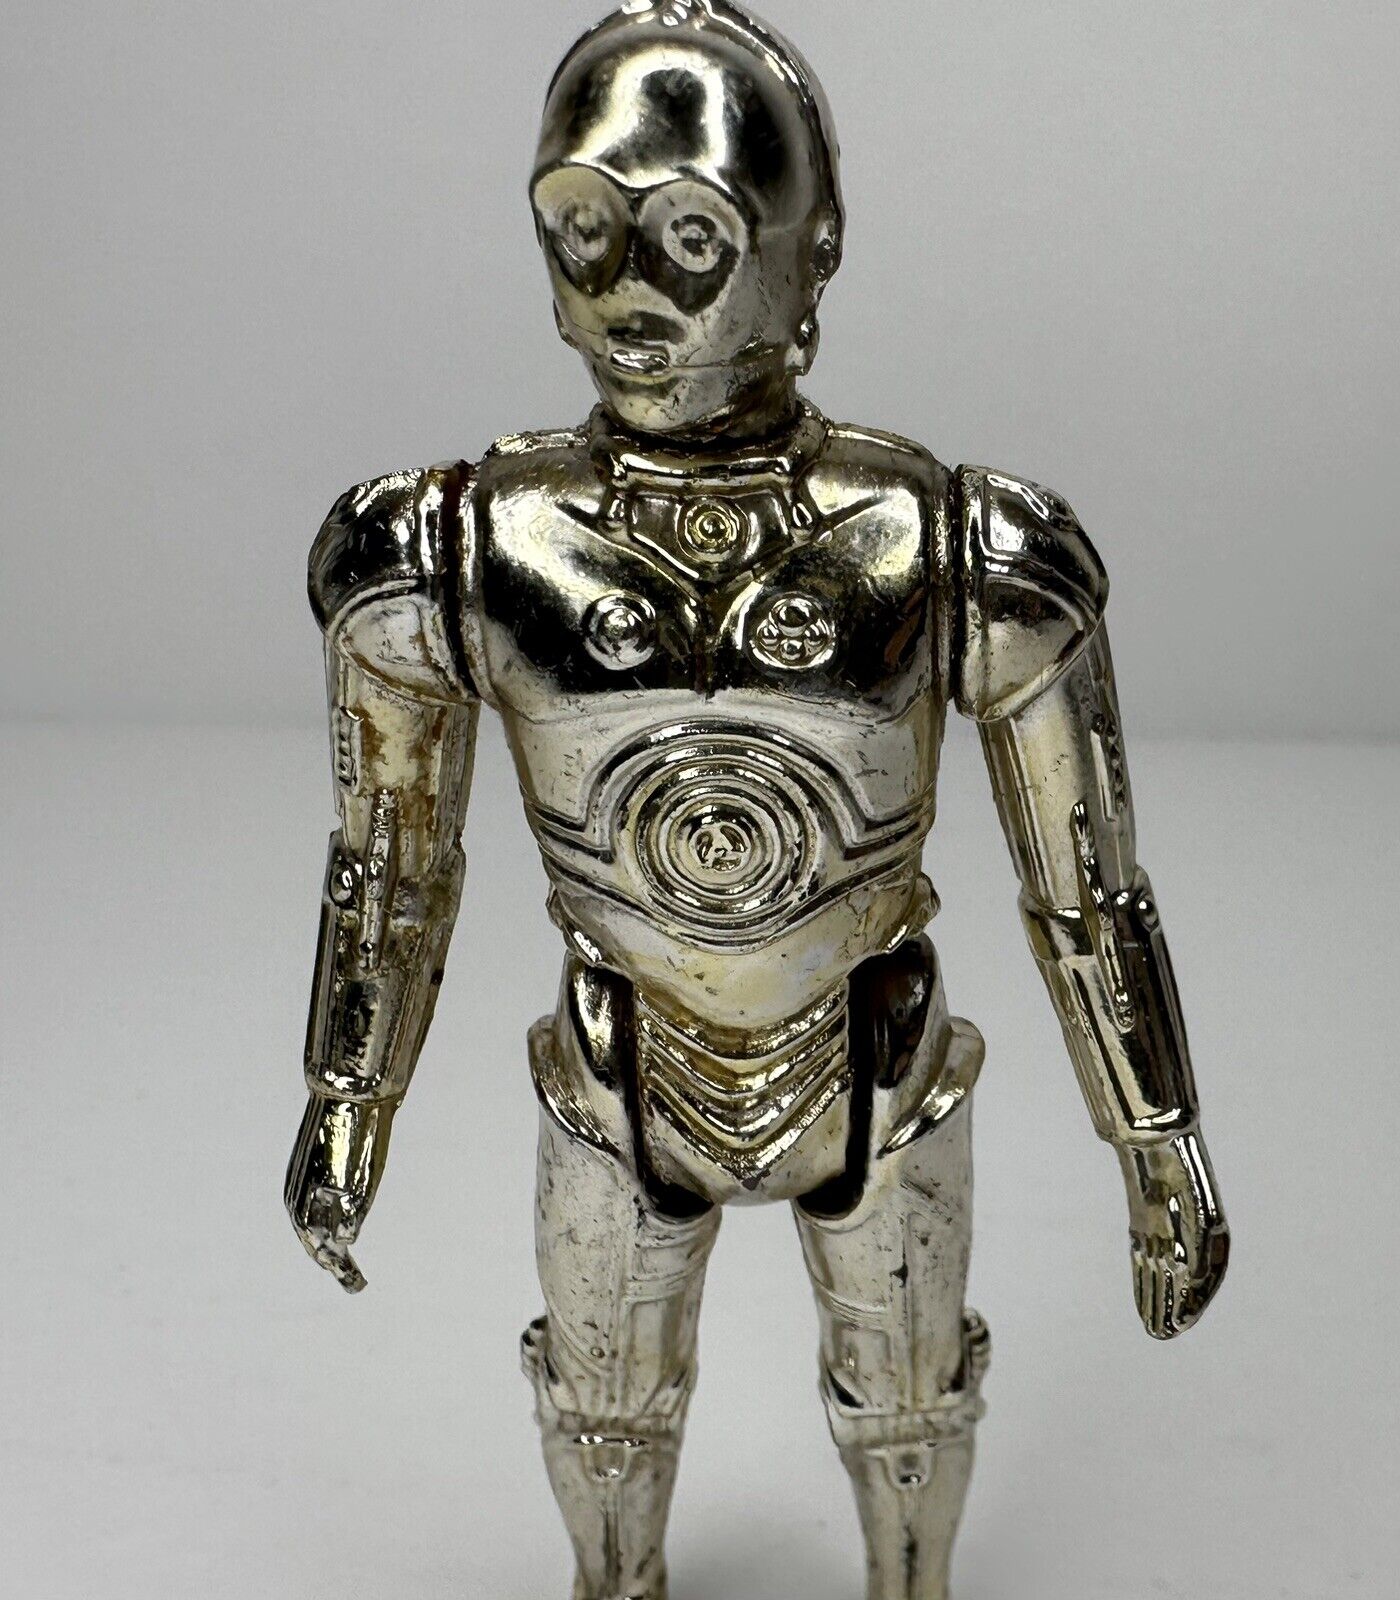 Vintage 1977 Kenner Star Wars C-3PO Action Figure - Original Hong Kong Variant - TreasuTiques